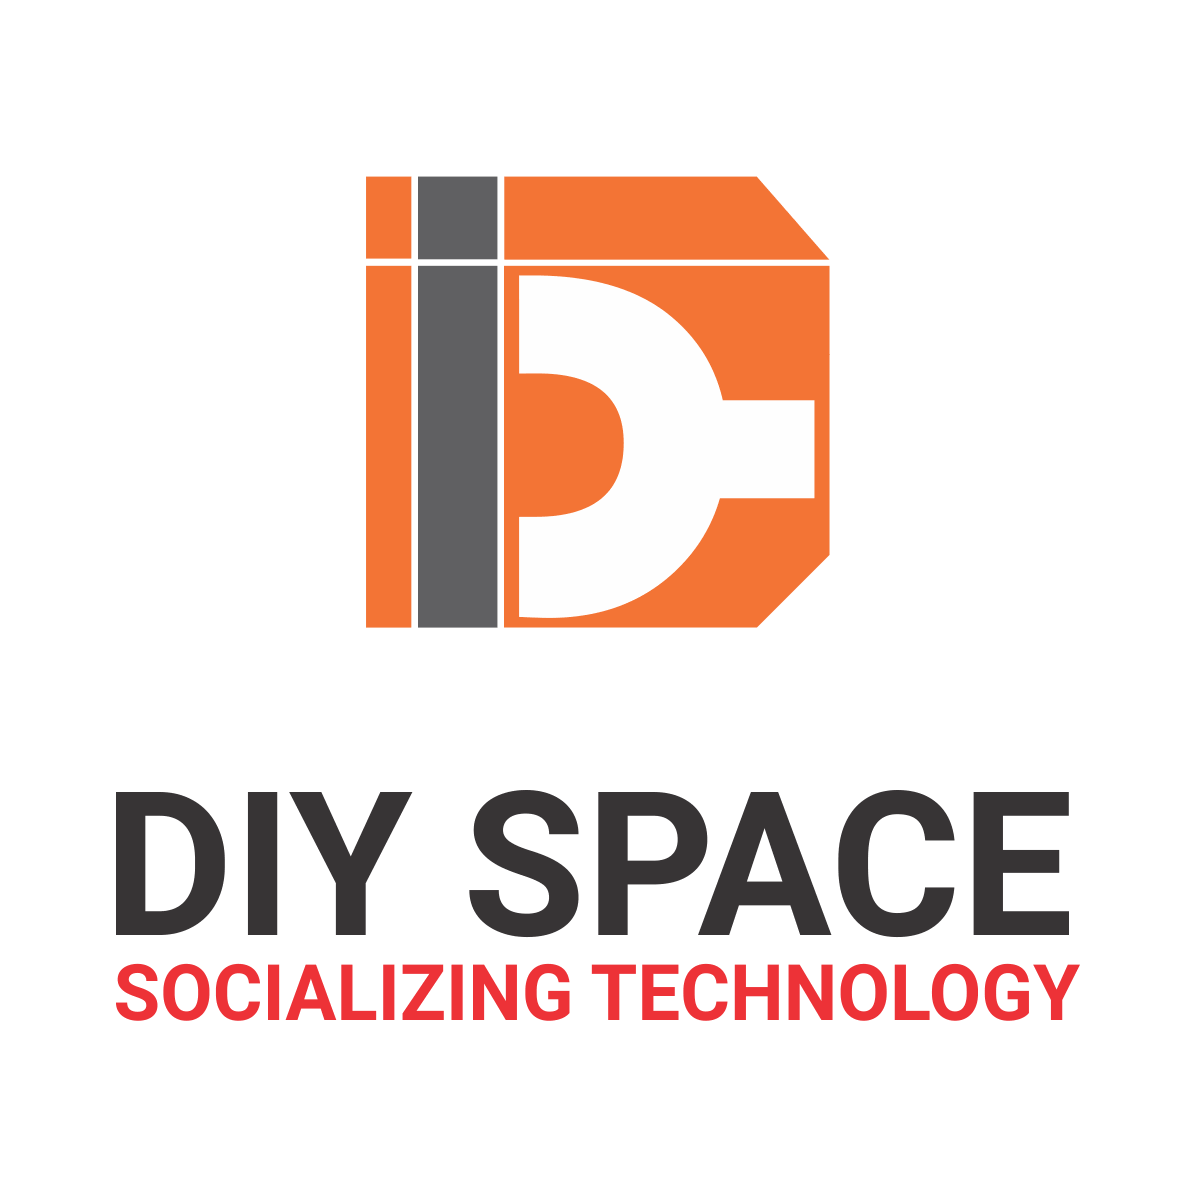 Diyspace logo sqr.png